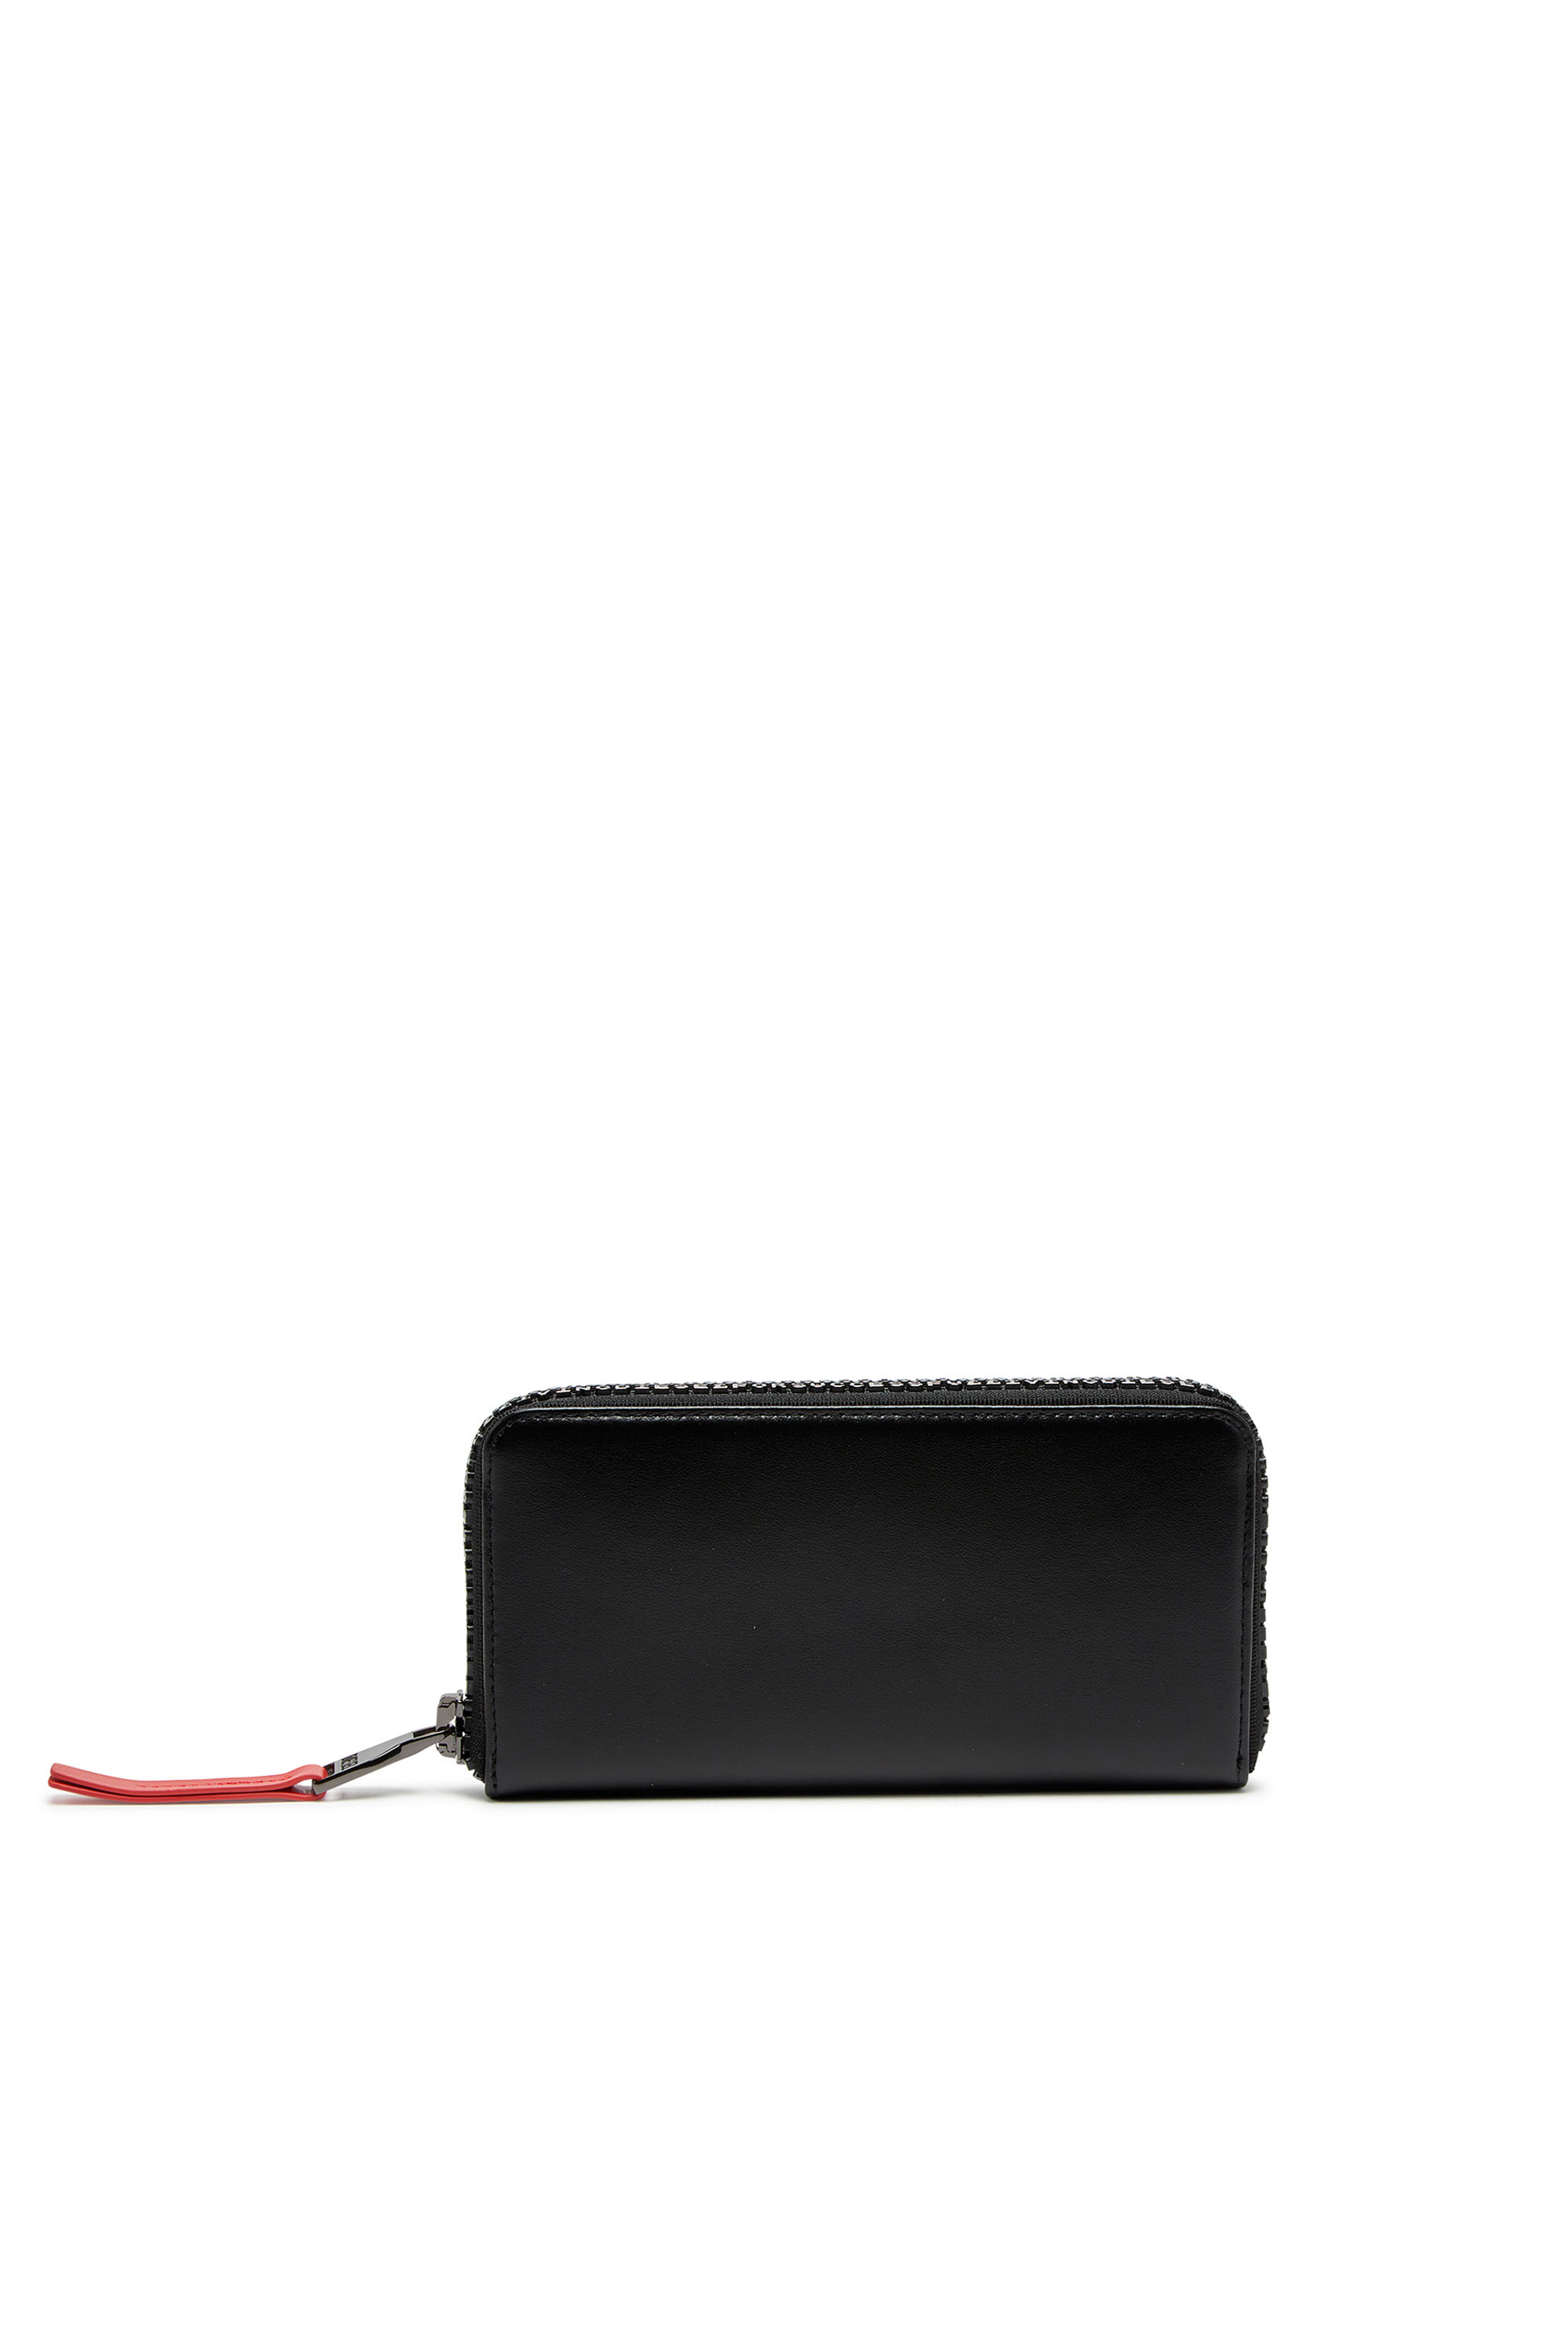 Diesel - ZIP-D CONTINETAL L, Man Long leather wallet with logo zip in Black - Image 1